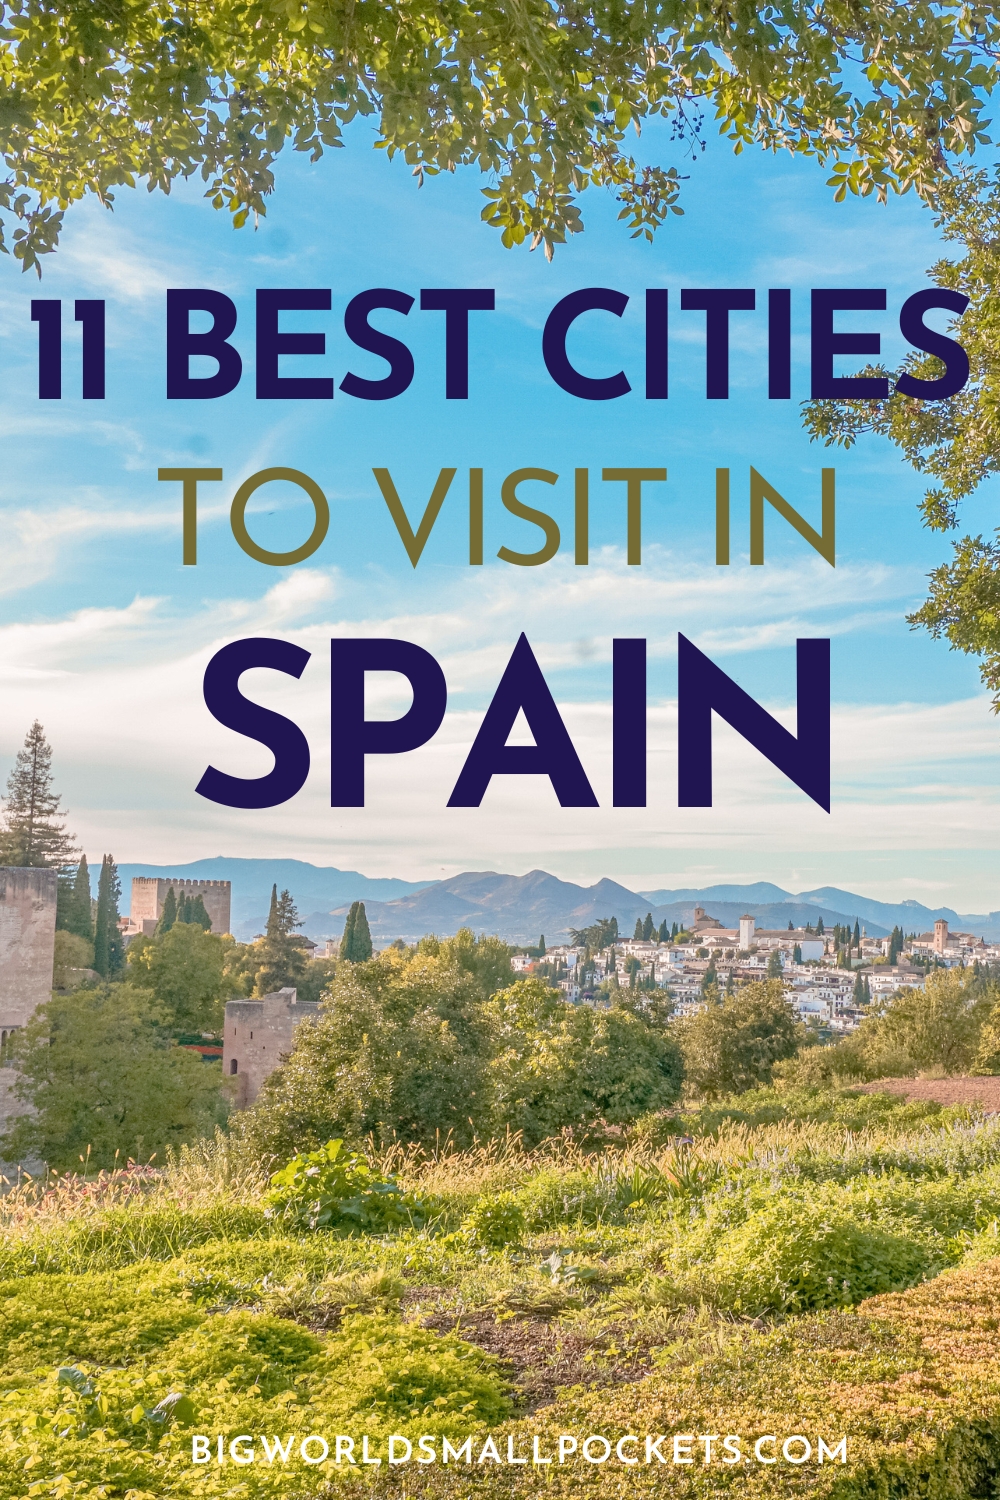 Top 11 Cities to Visit in Spain